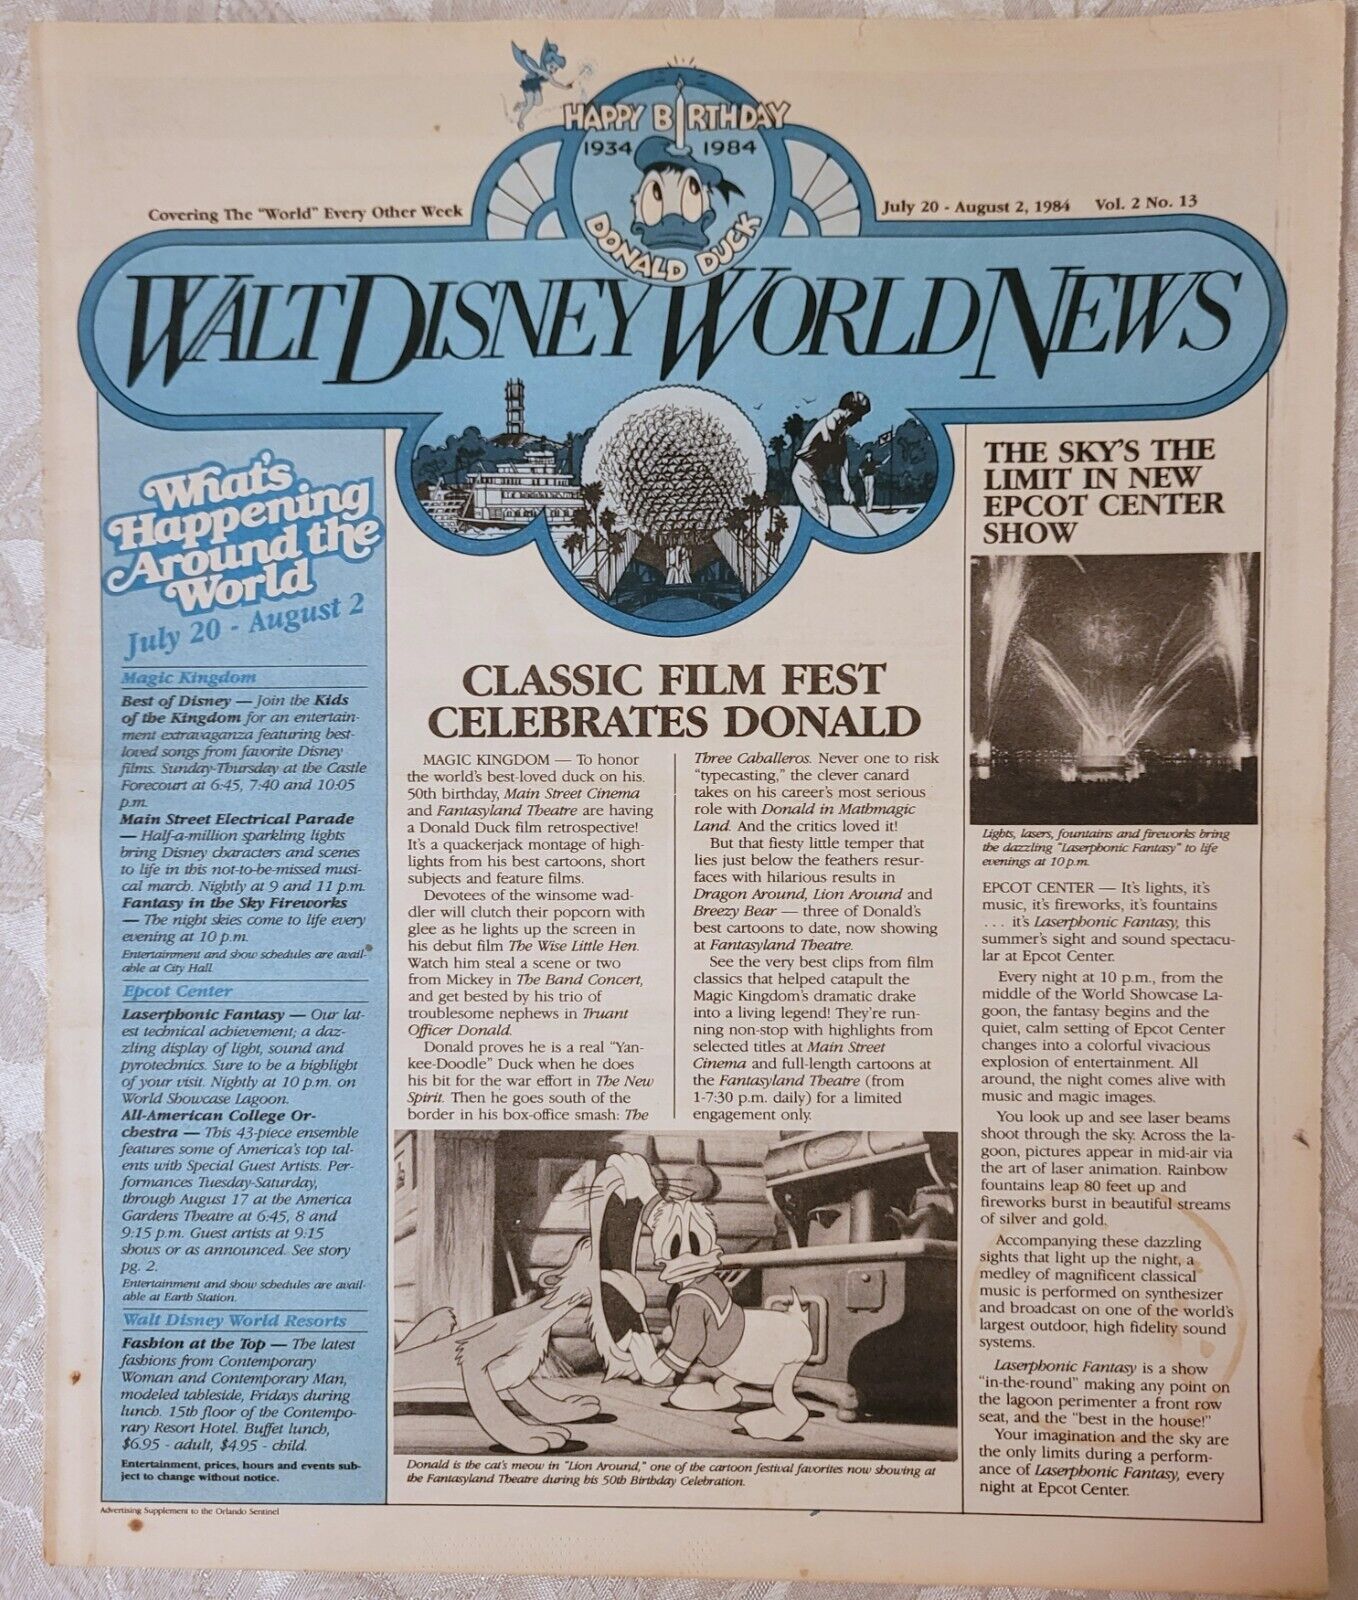 RARE AUG 1984 WALT DISNEY WORLD NEWS INFO GUIDE EPCOT CENTER LASERPHONIC FANTASY